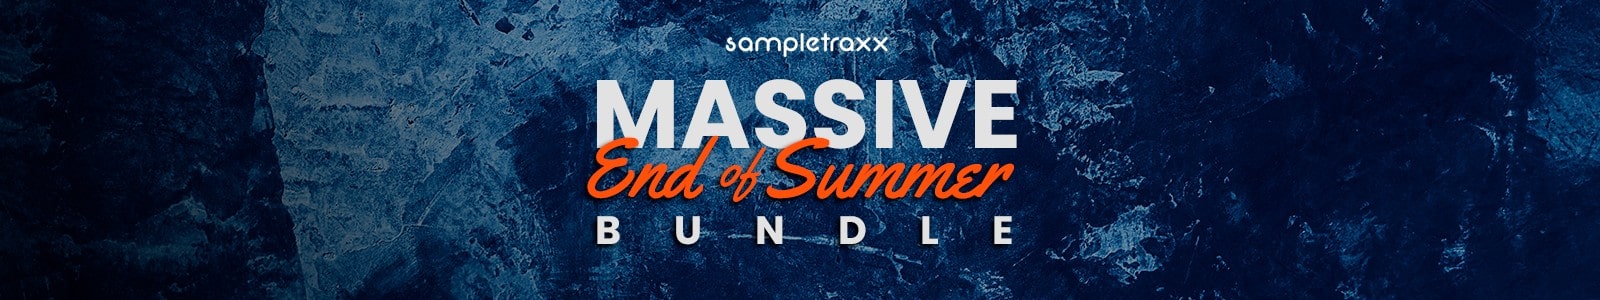 Sampletraxx Massive 3-in-1 End of Summer Bundle